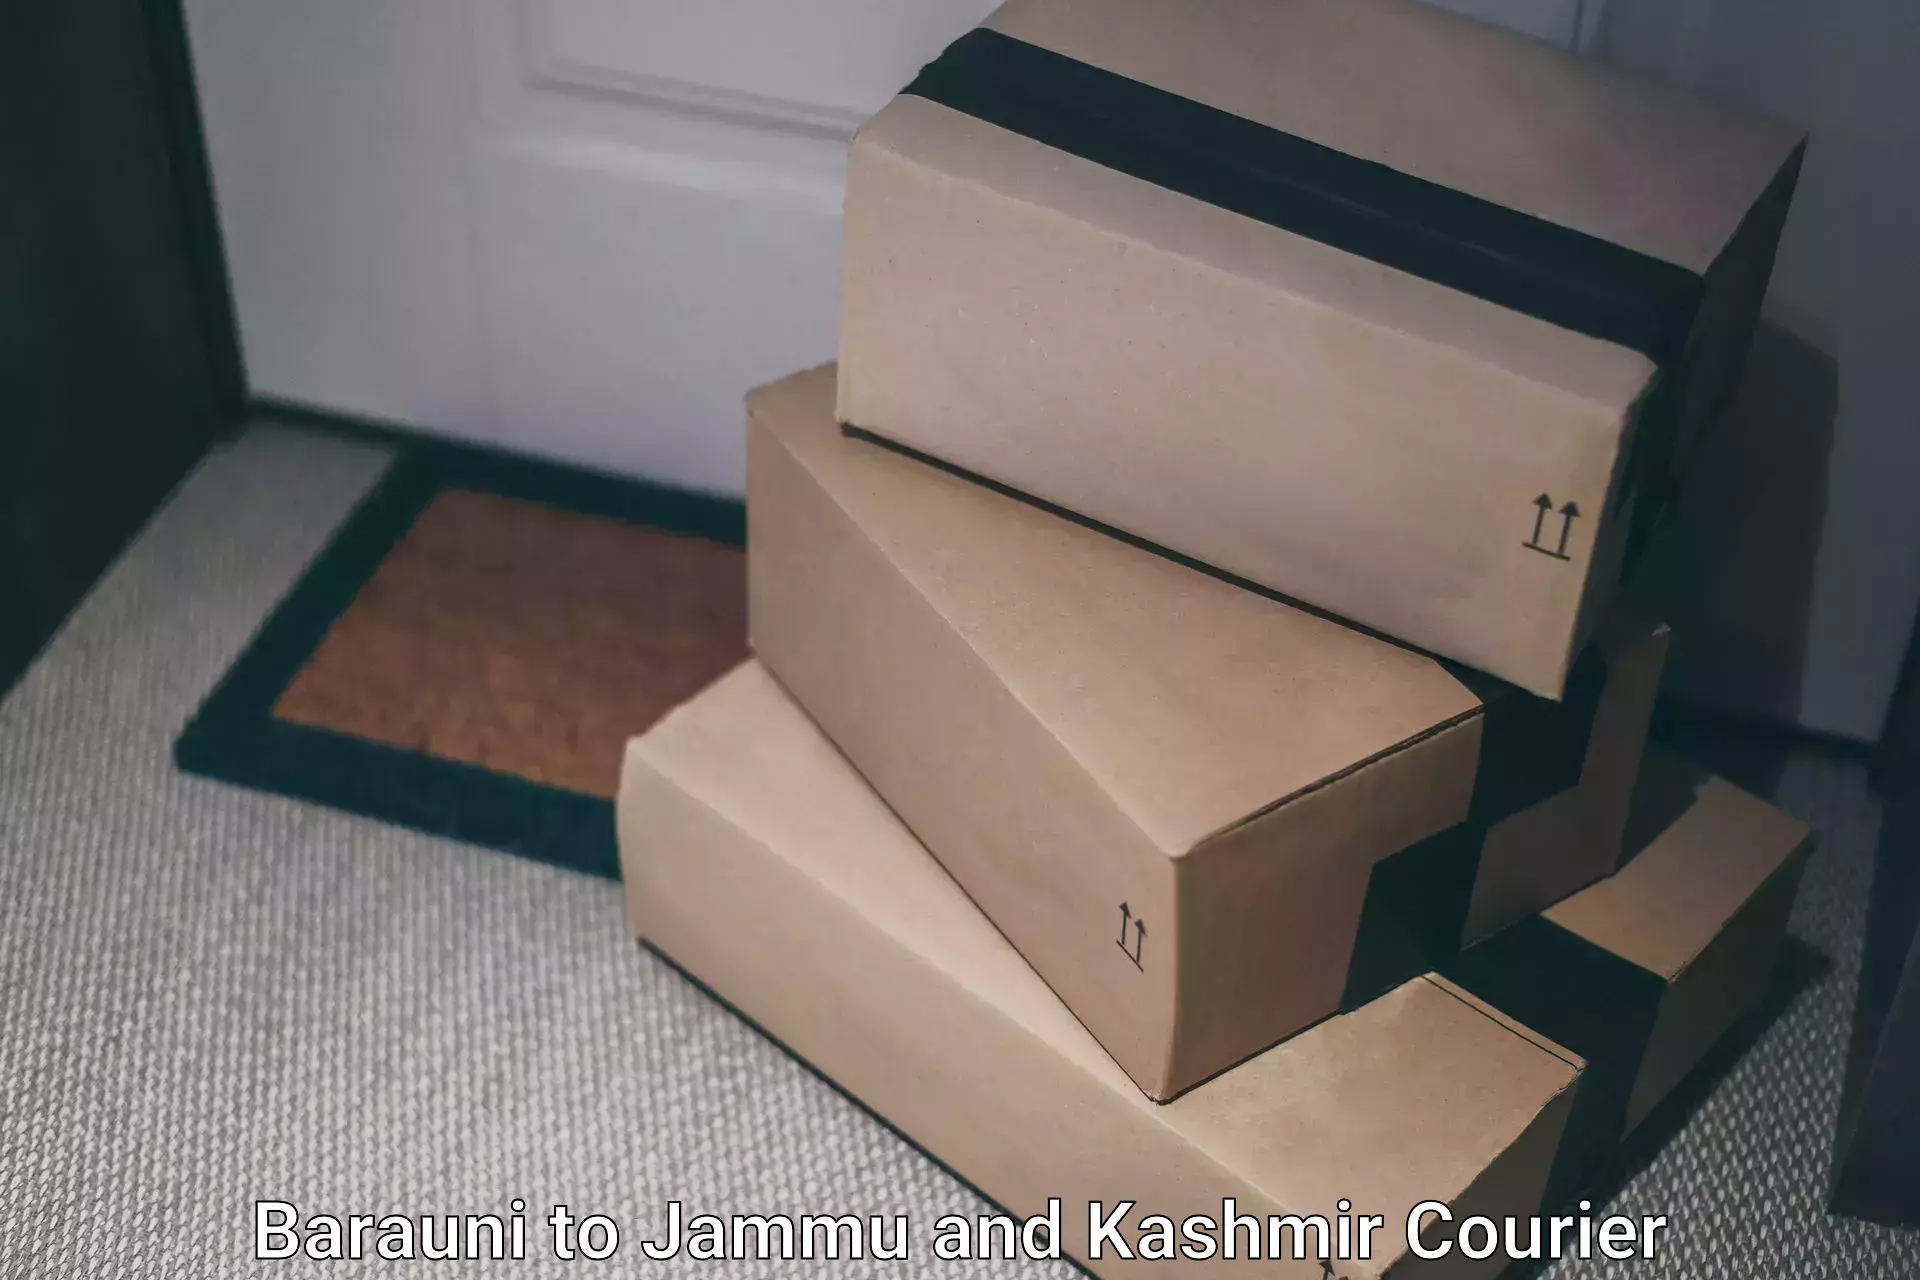 Express logistics providers Barauni to Jammu and Kashmir